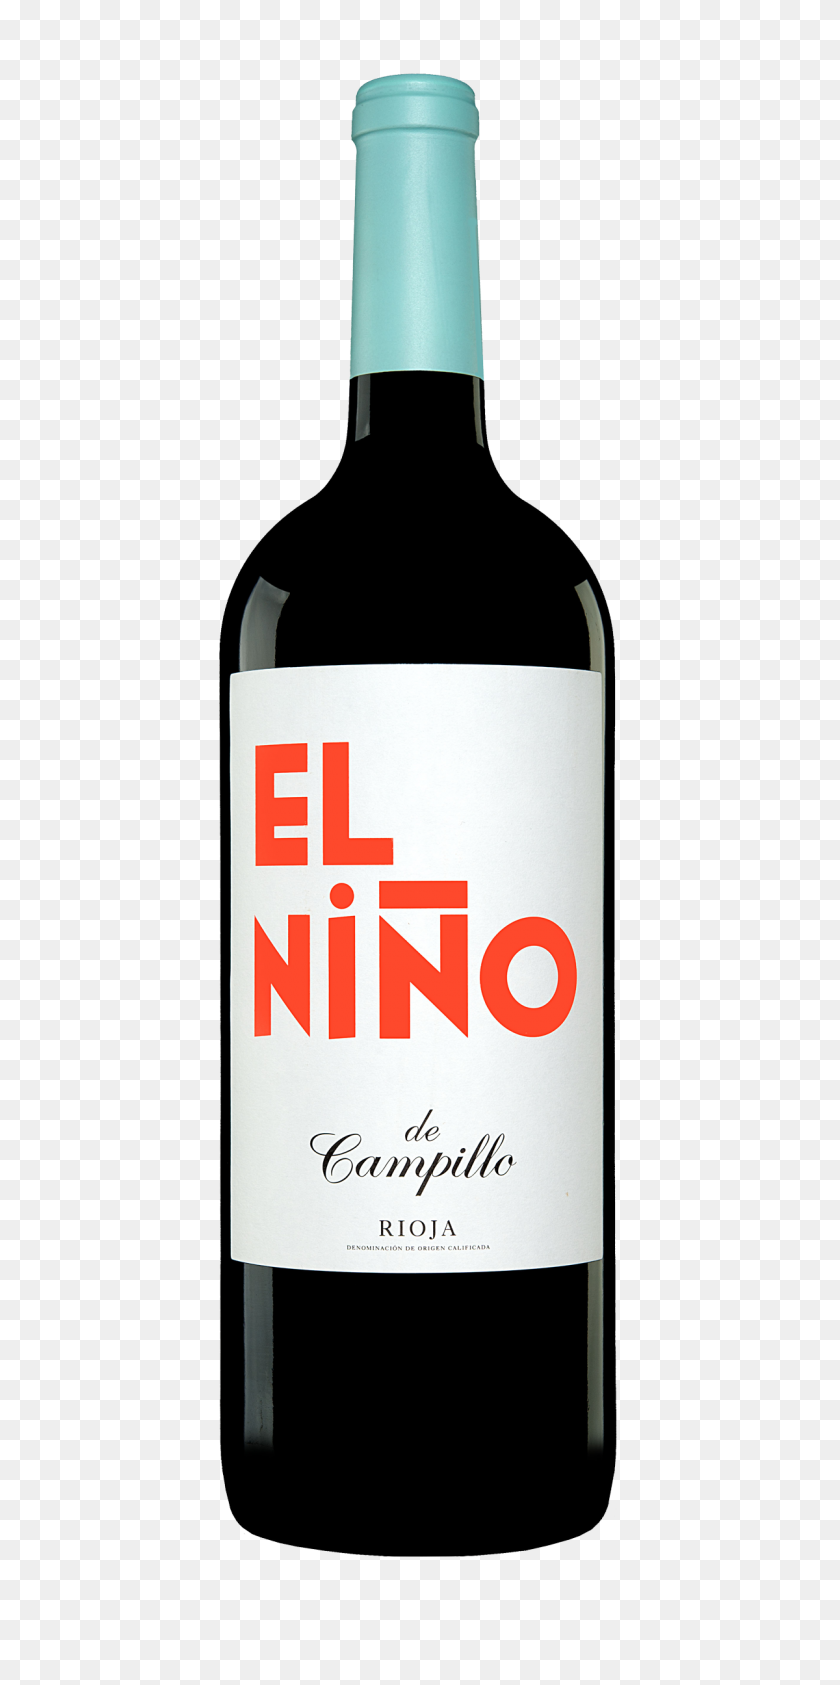 1200x2500 Elninodecampillo Desembarco, Vino Español - Botella De Alcohol Png